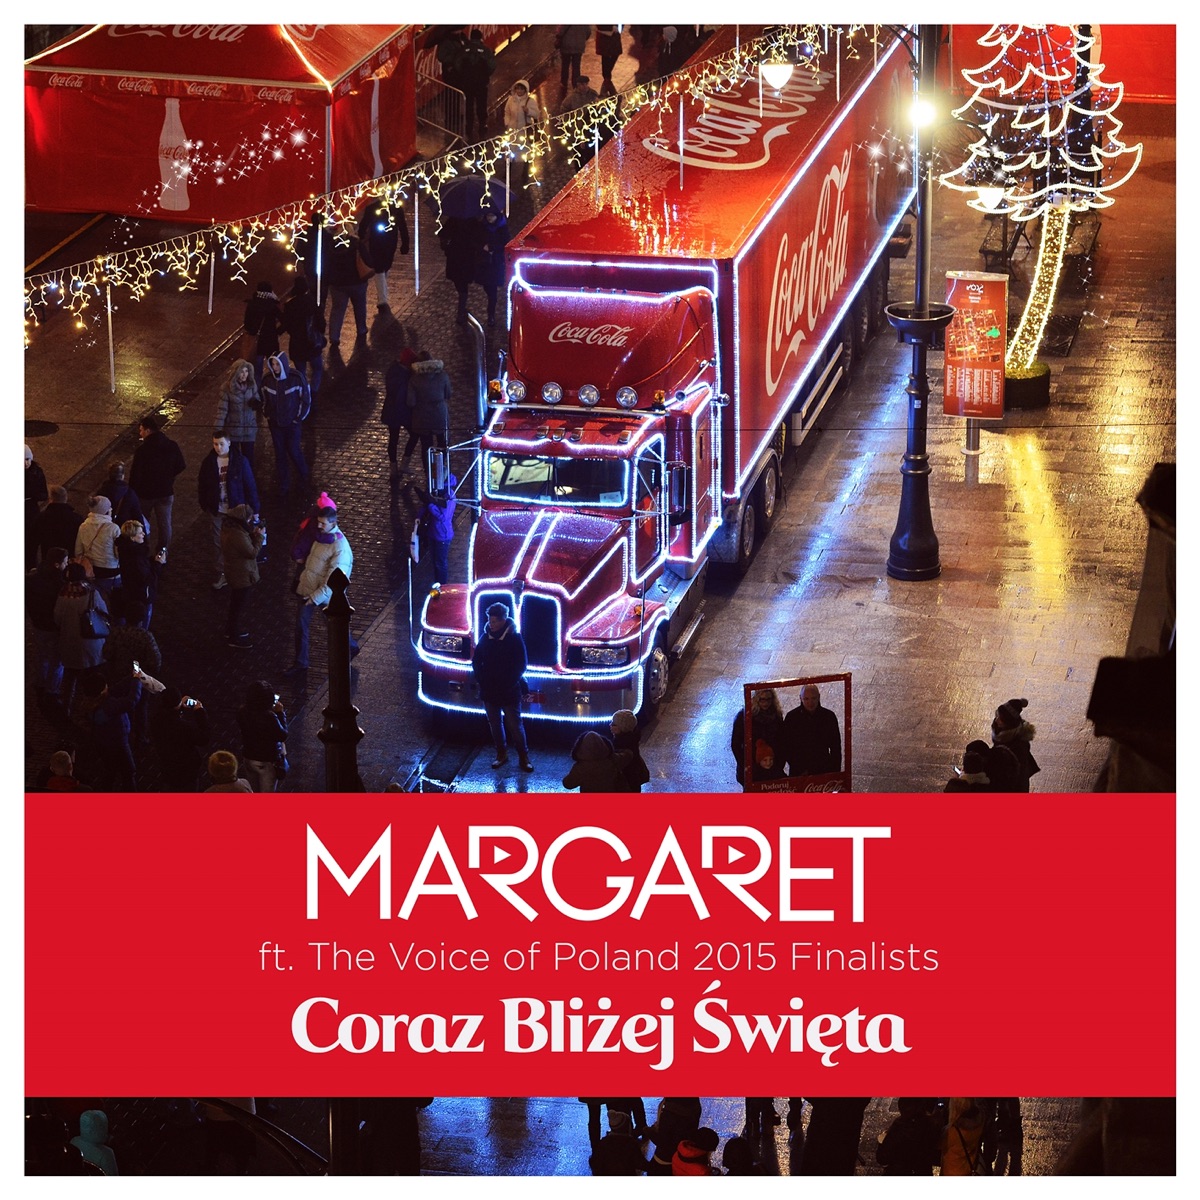 Margaret ft. featuring The Voice Of Poland 2015 Finalists Coraz bliżej święta cover artwork